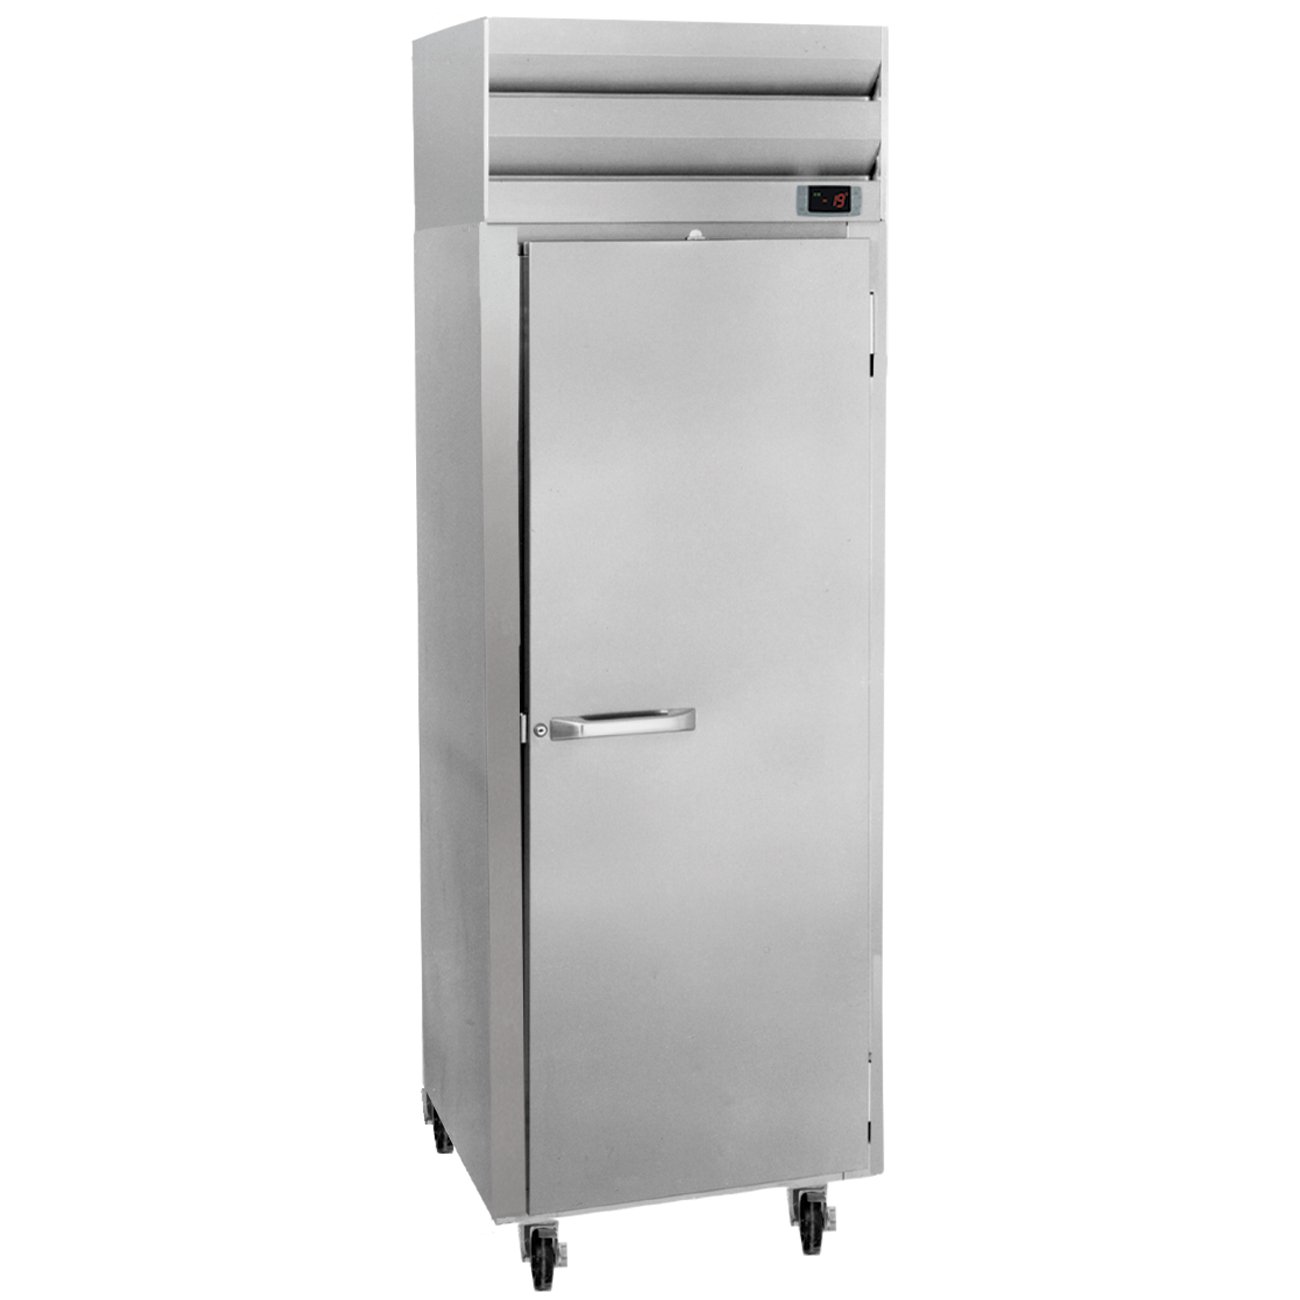 Howard-McCray SR22-P Reach-In Refrigerator